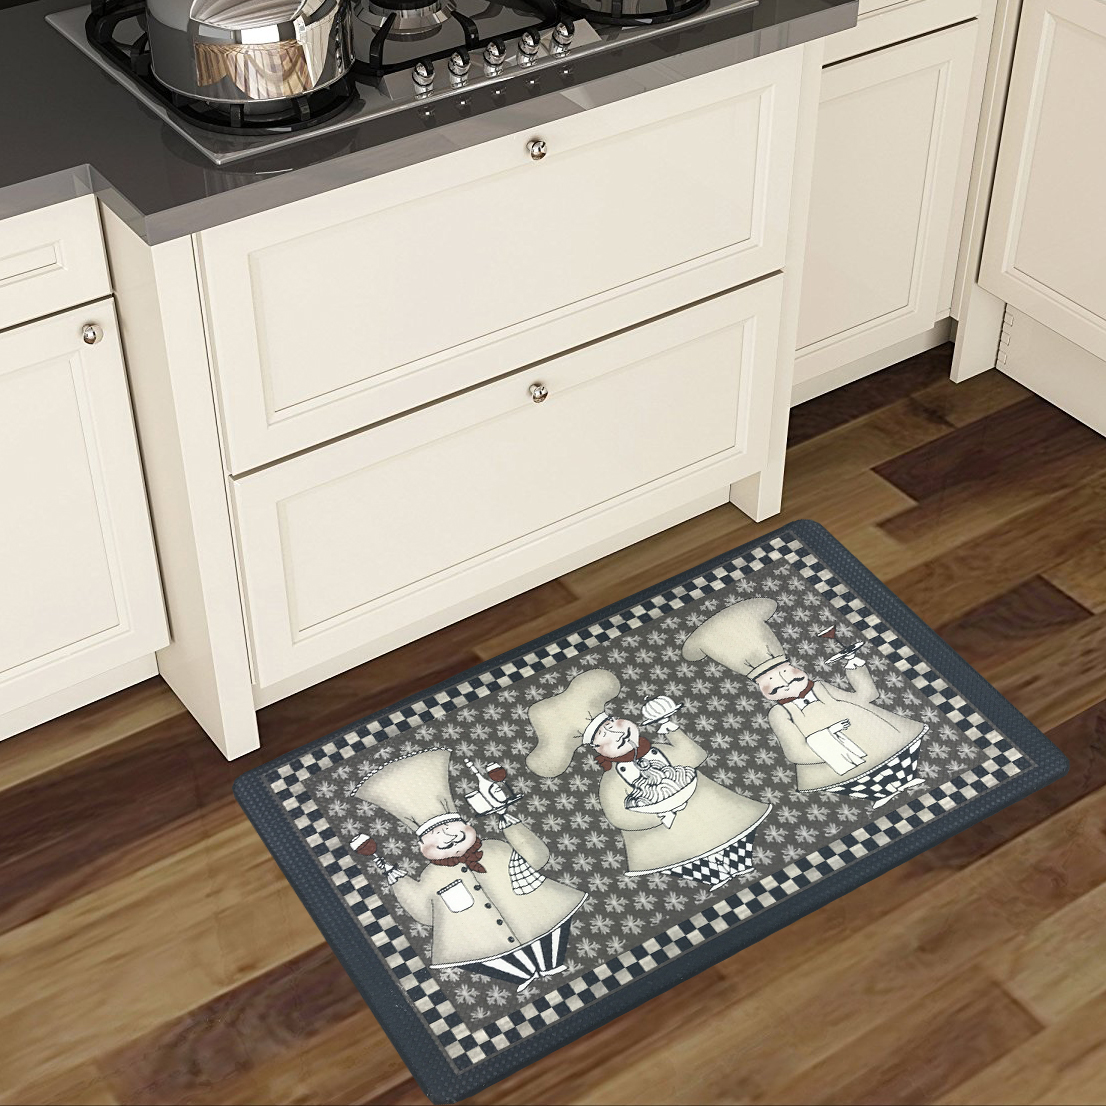 Decorative Kitchen Mats Anti-Fatigue Comfort Floor Mat Manufacturer